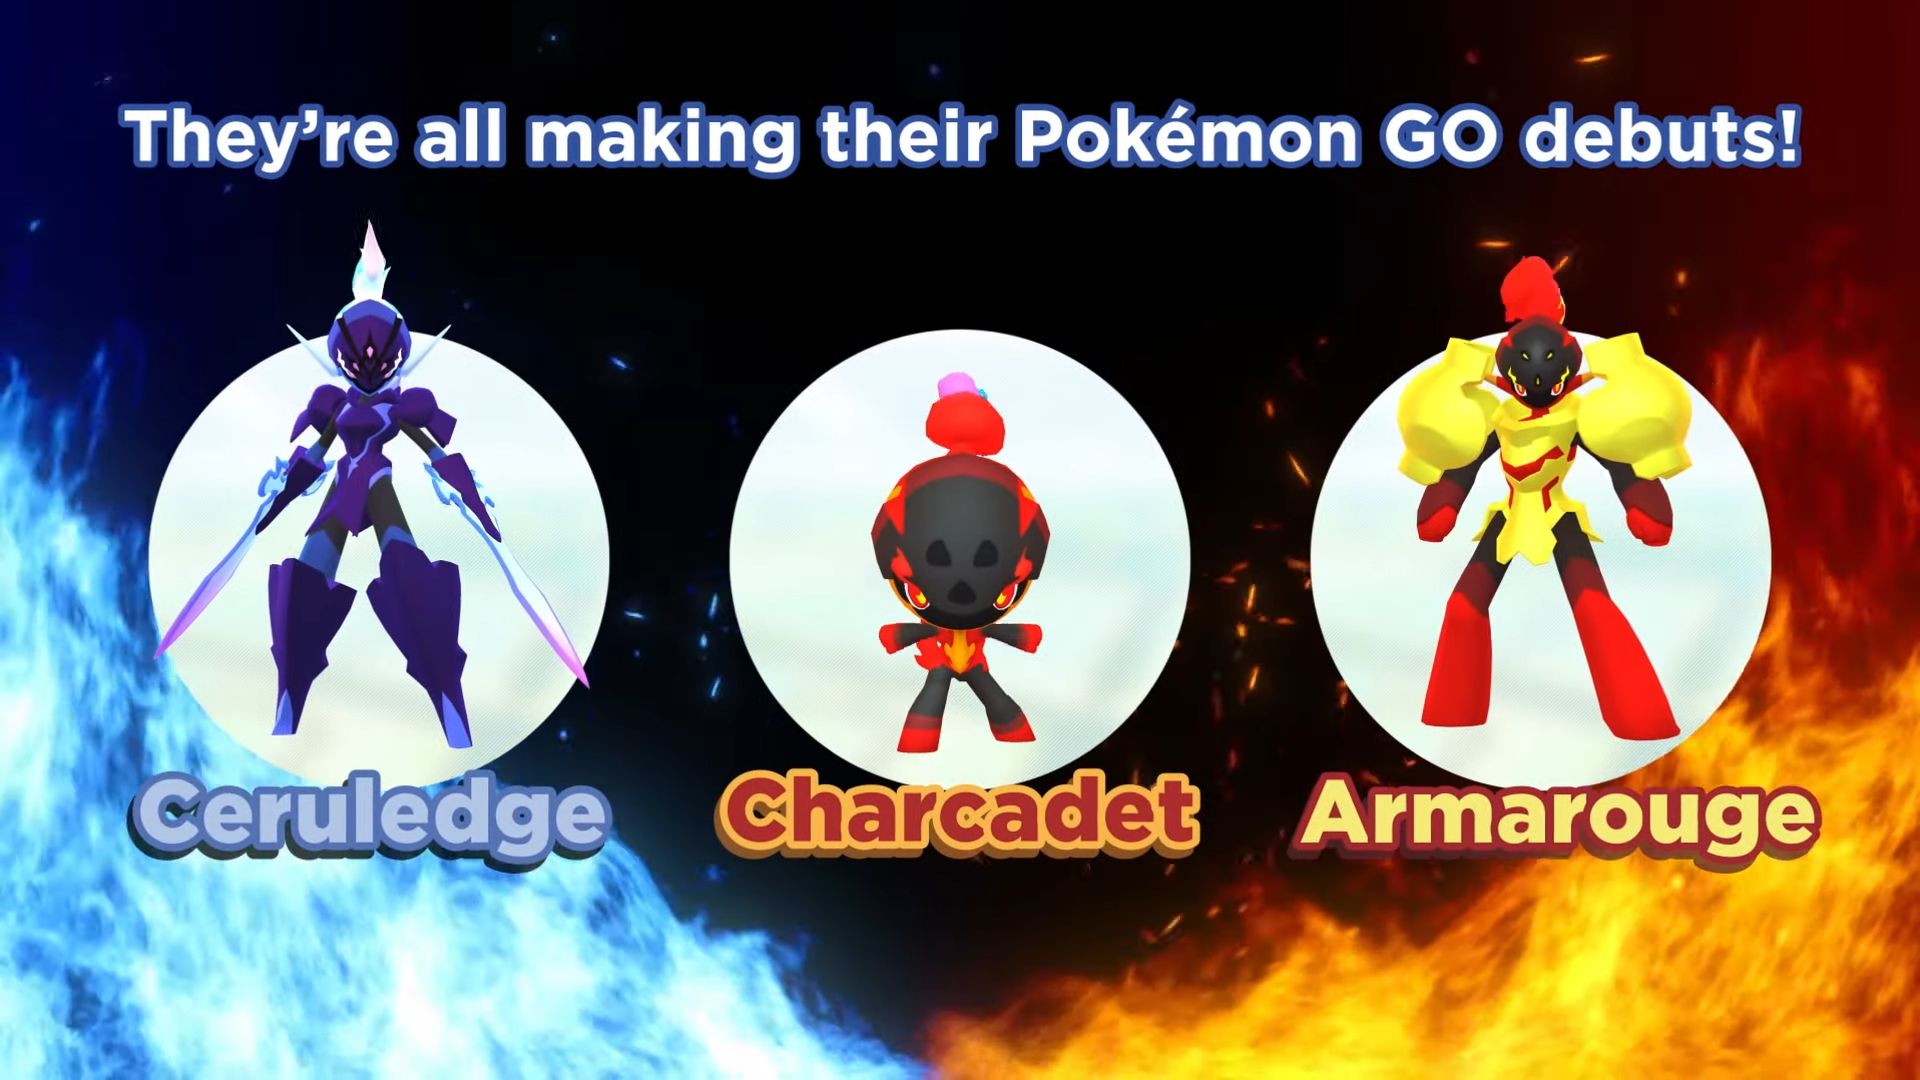 Charcadet, Armarouge, and Ceruledge in Pokemon Go